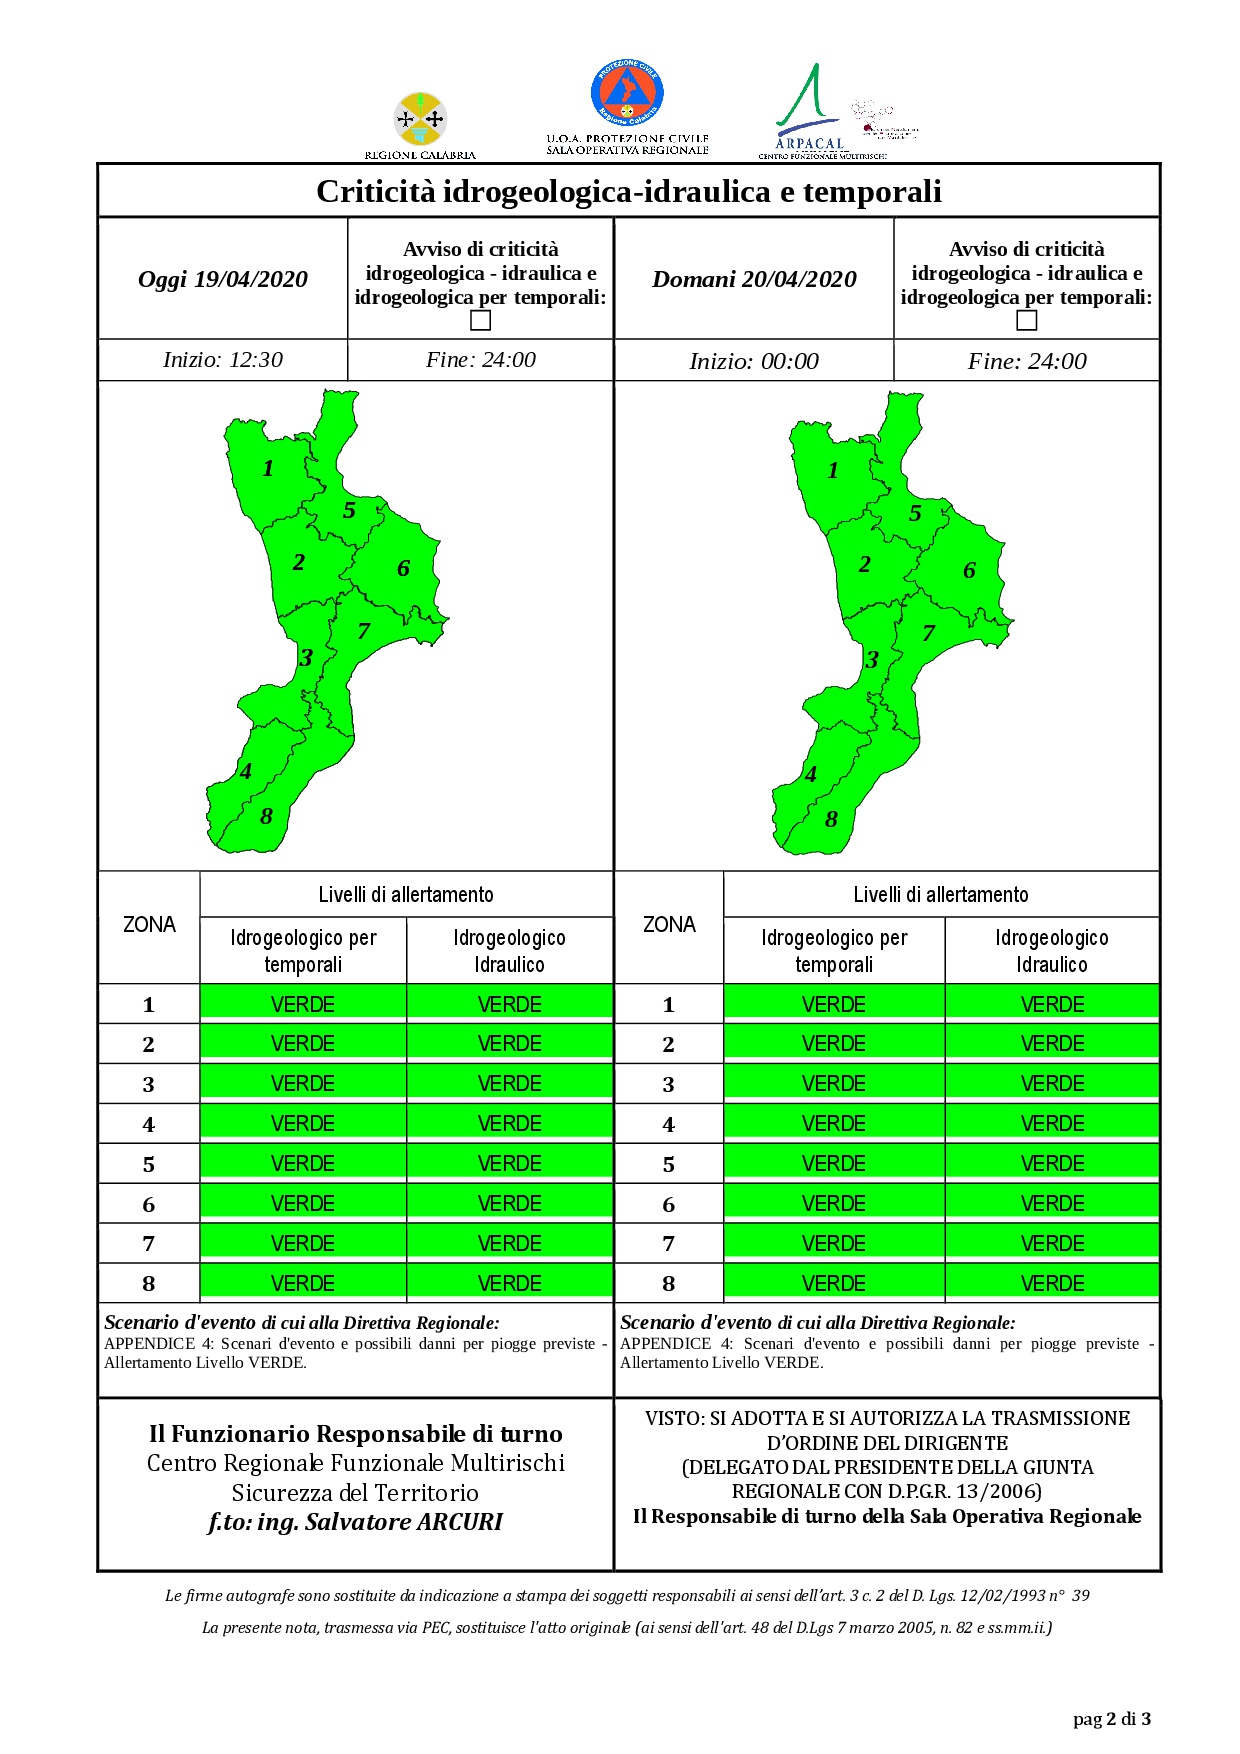 Criticità idrogeologica-idraulica e temporali in Calabria 19-04-2020